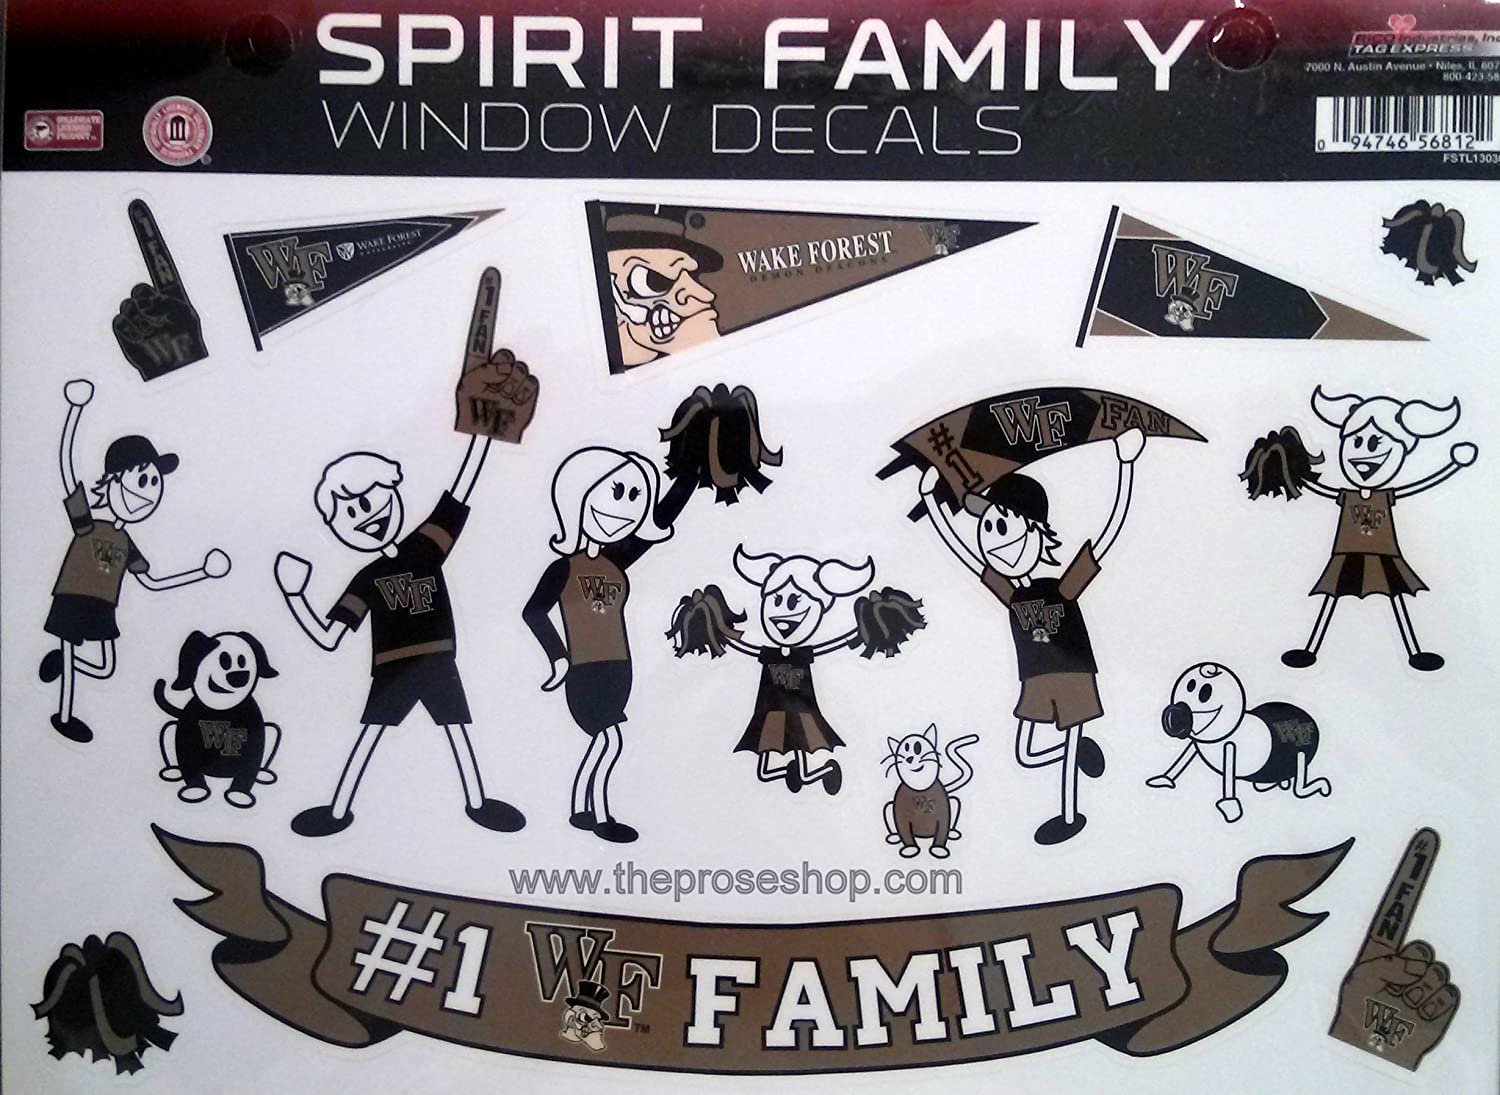 Wake Forest University Demon Deacons Decal Sticker Family Spirit Sheet Flat Vinyl 8x11 Inch